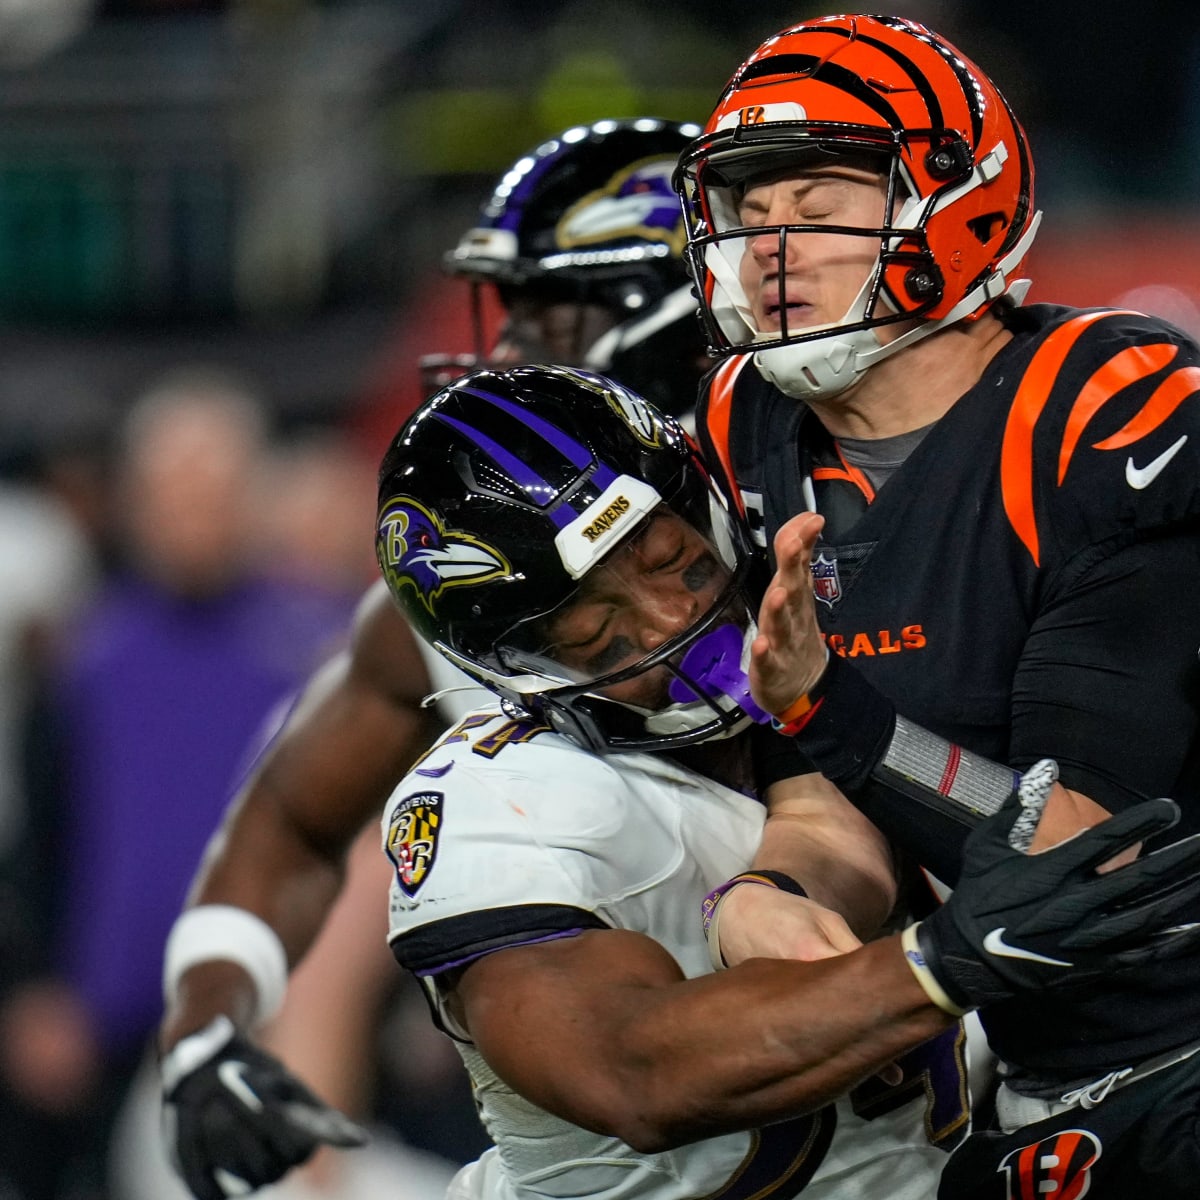 Baltimore Ravens vs. Cincinnati Bengals: How to Watch, Stream